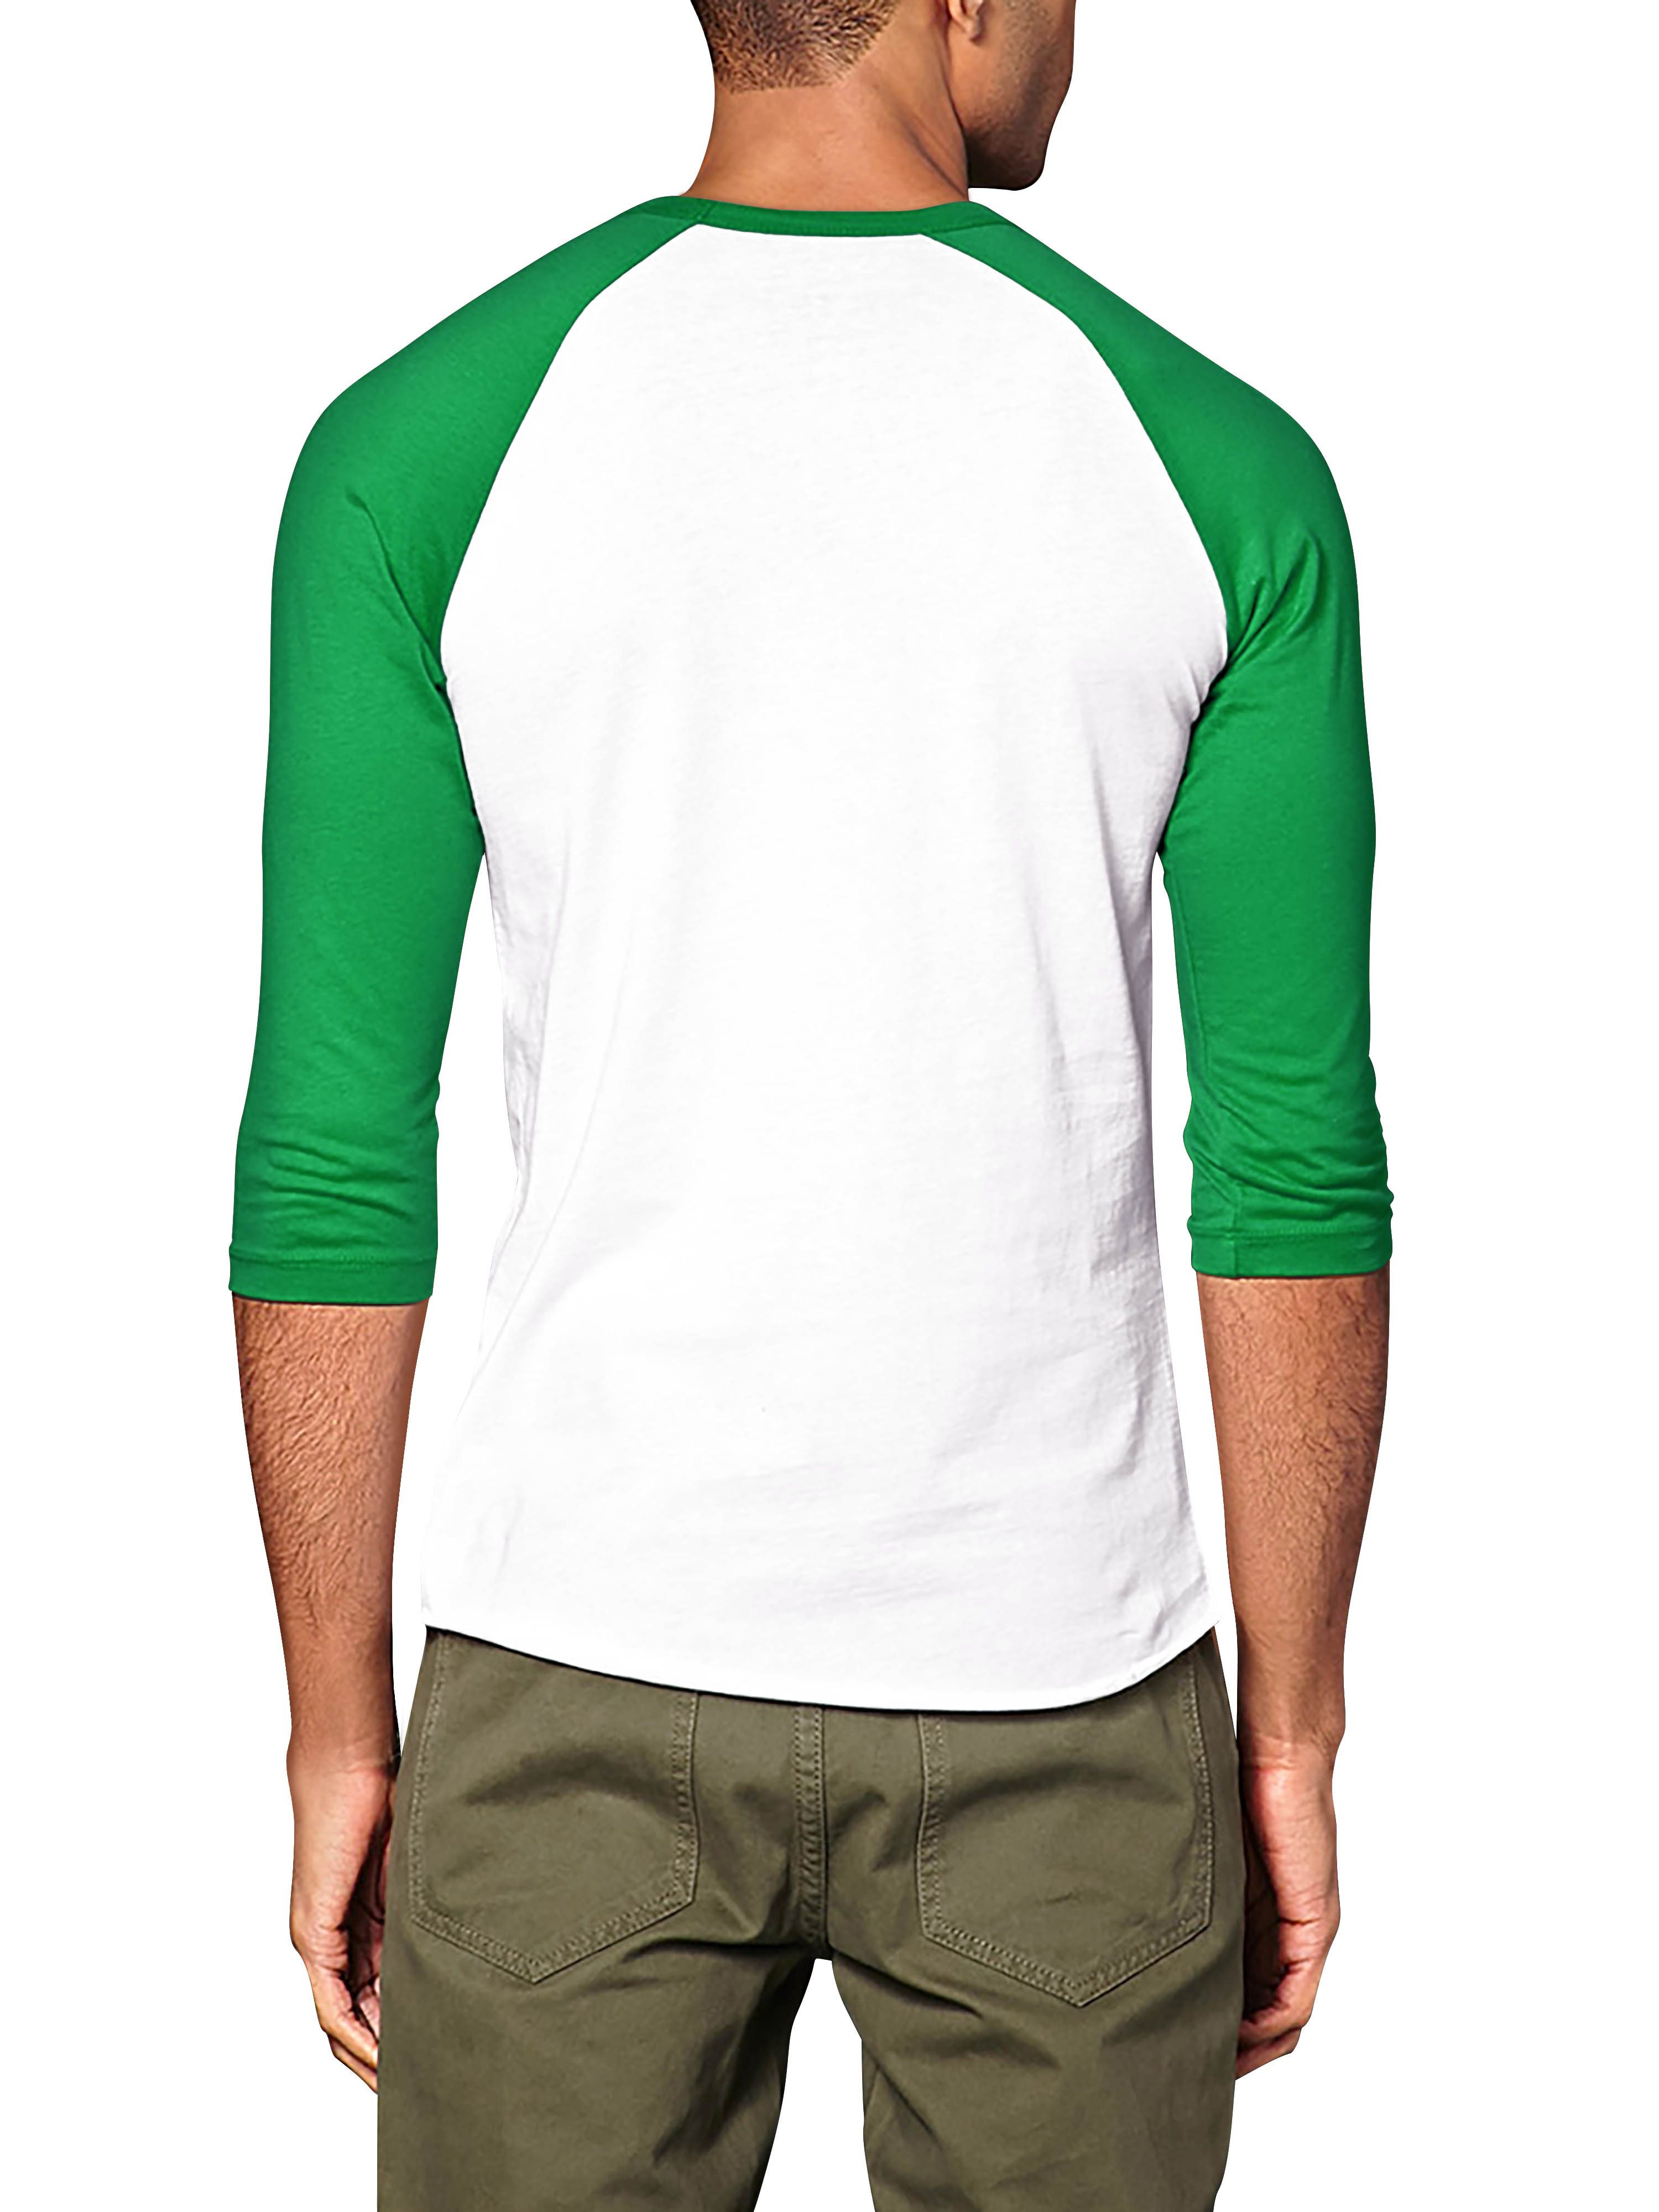 Ma Croix Mens 3/4 Sleeve Raglan Baseball T Shirt - image 4 of 4